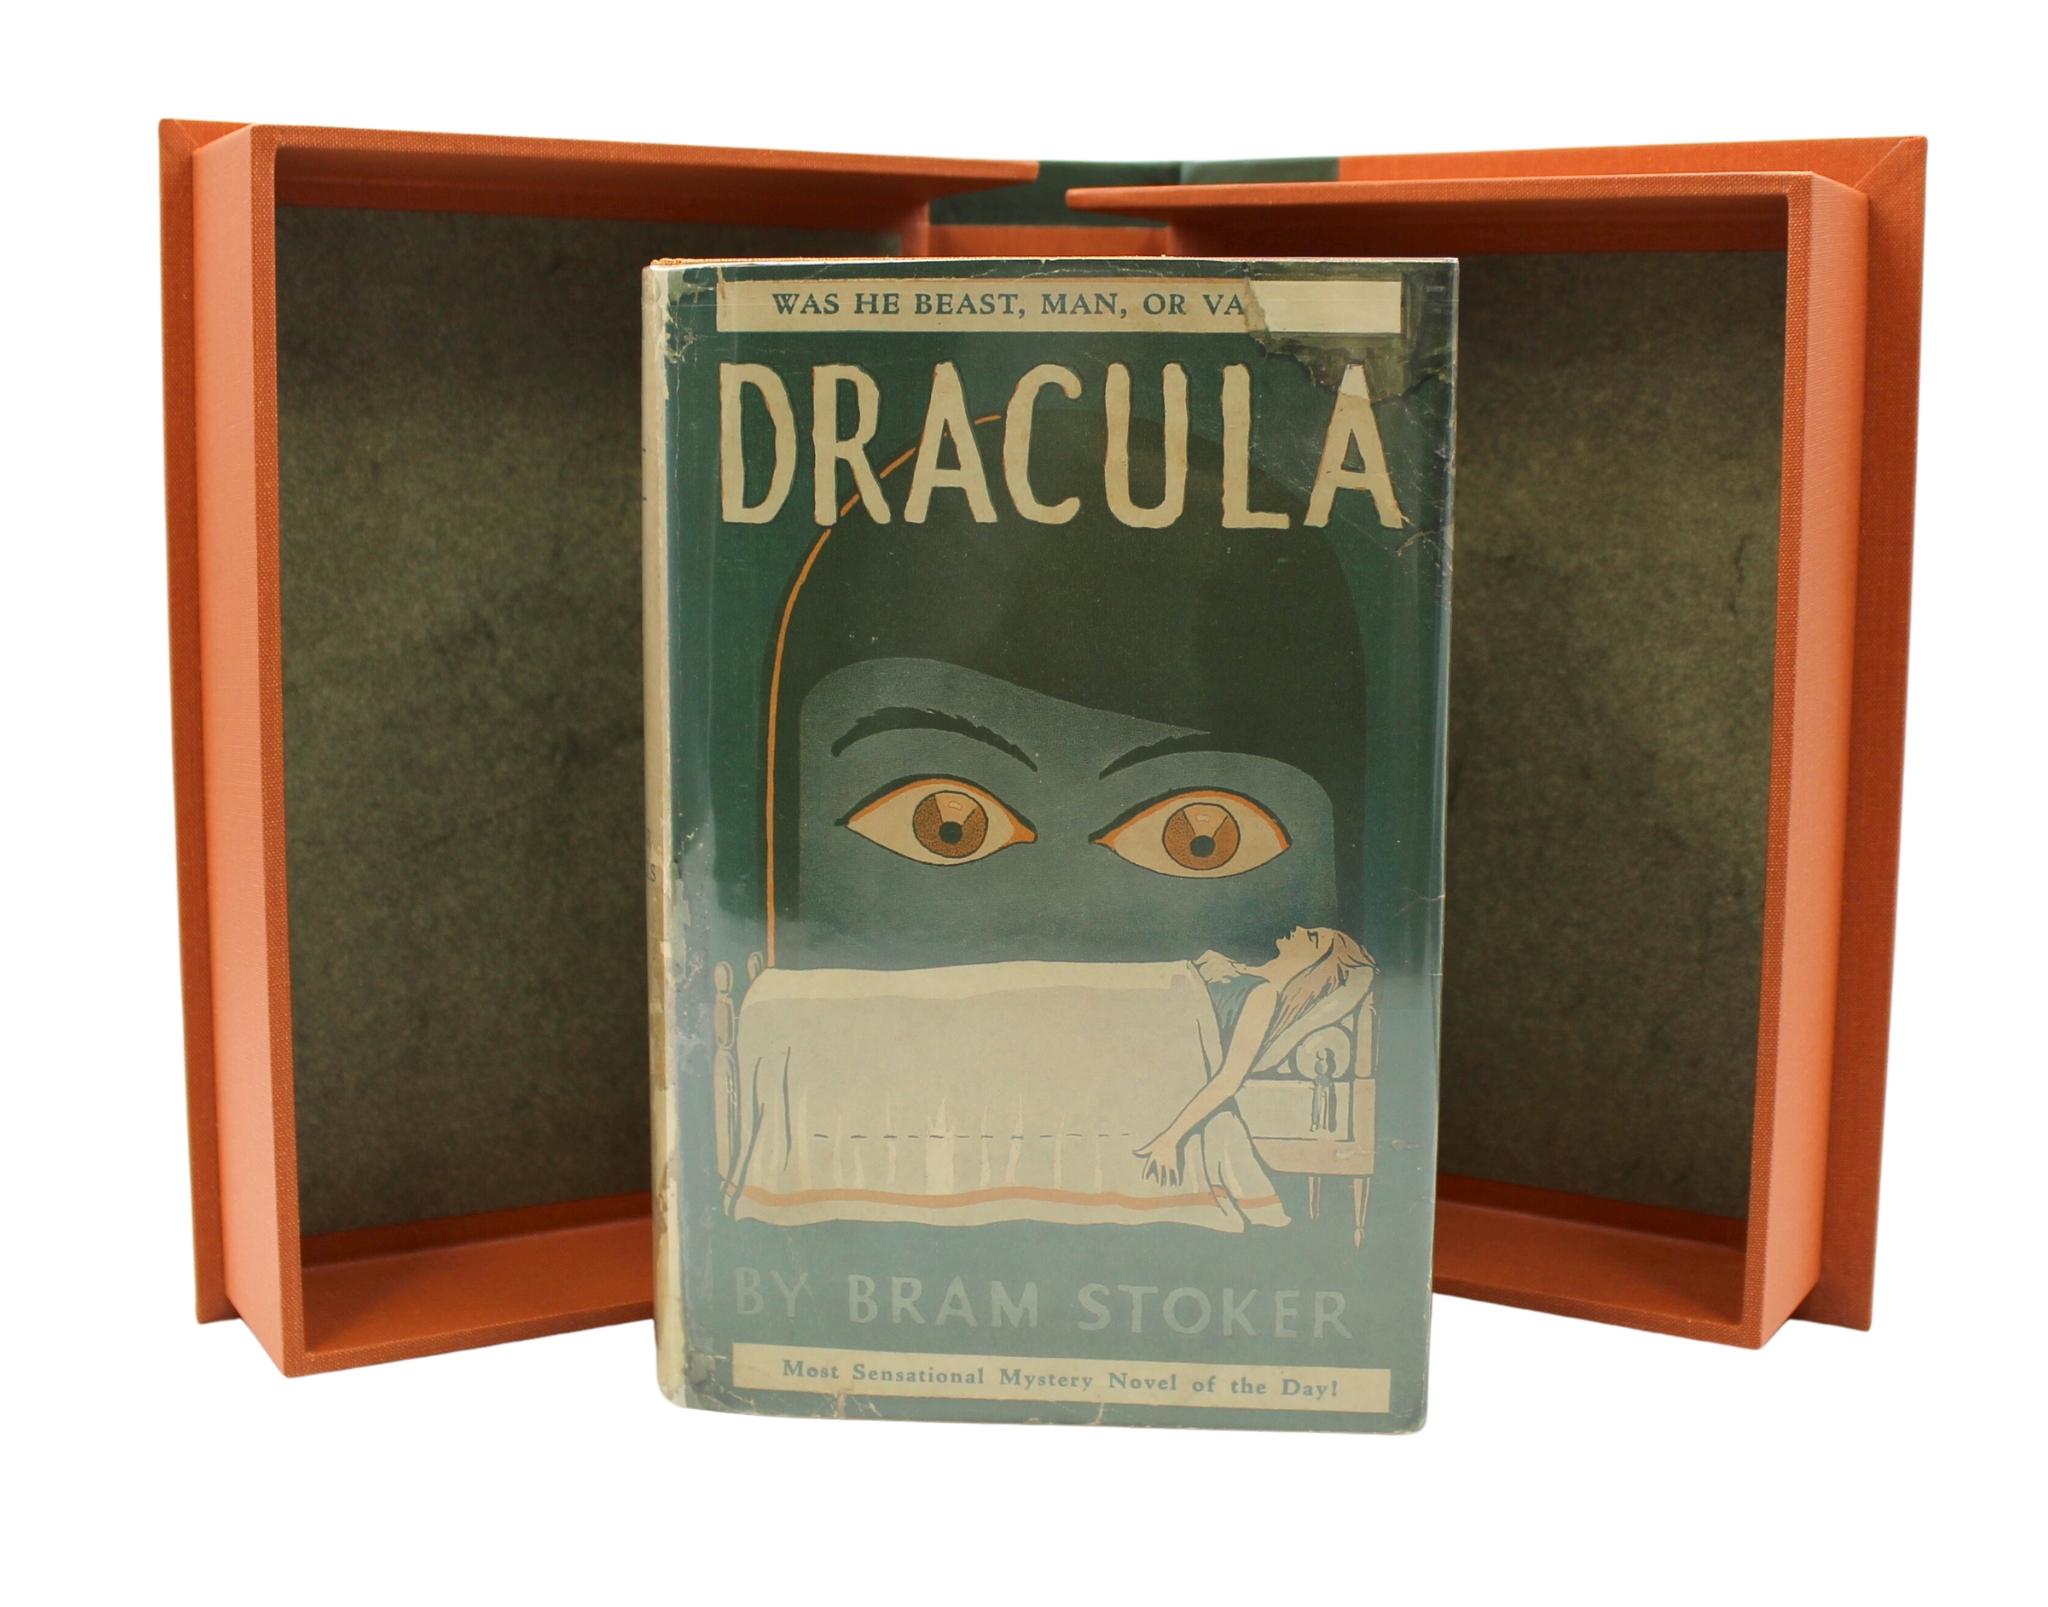 bram stoker's dracula original book cover